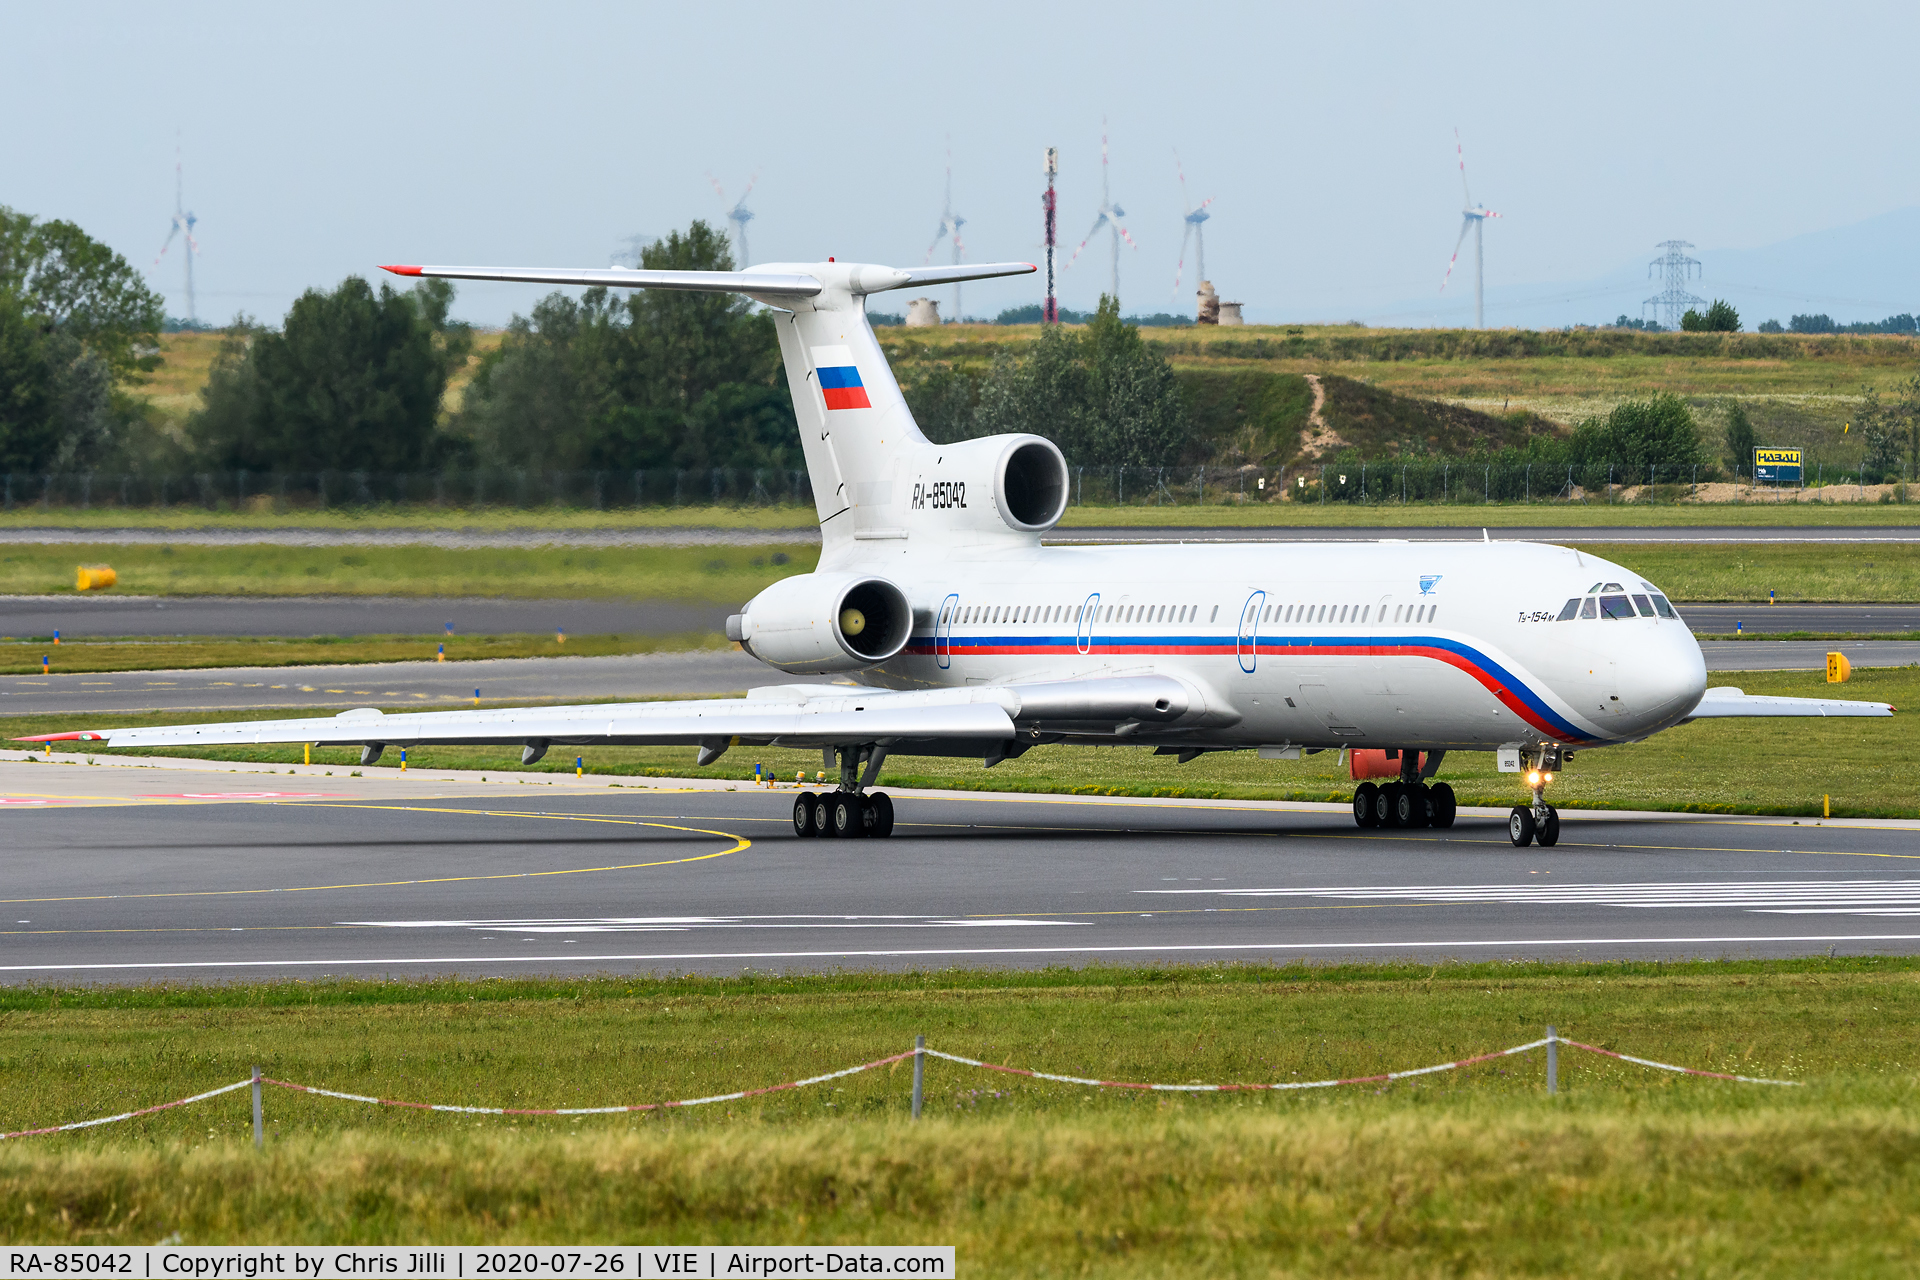 RA-85042, 2012 Tupolev Tu-154M C/N 12A0998, Russian Air Force